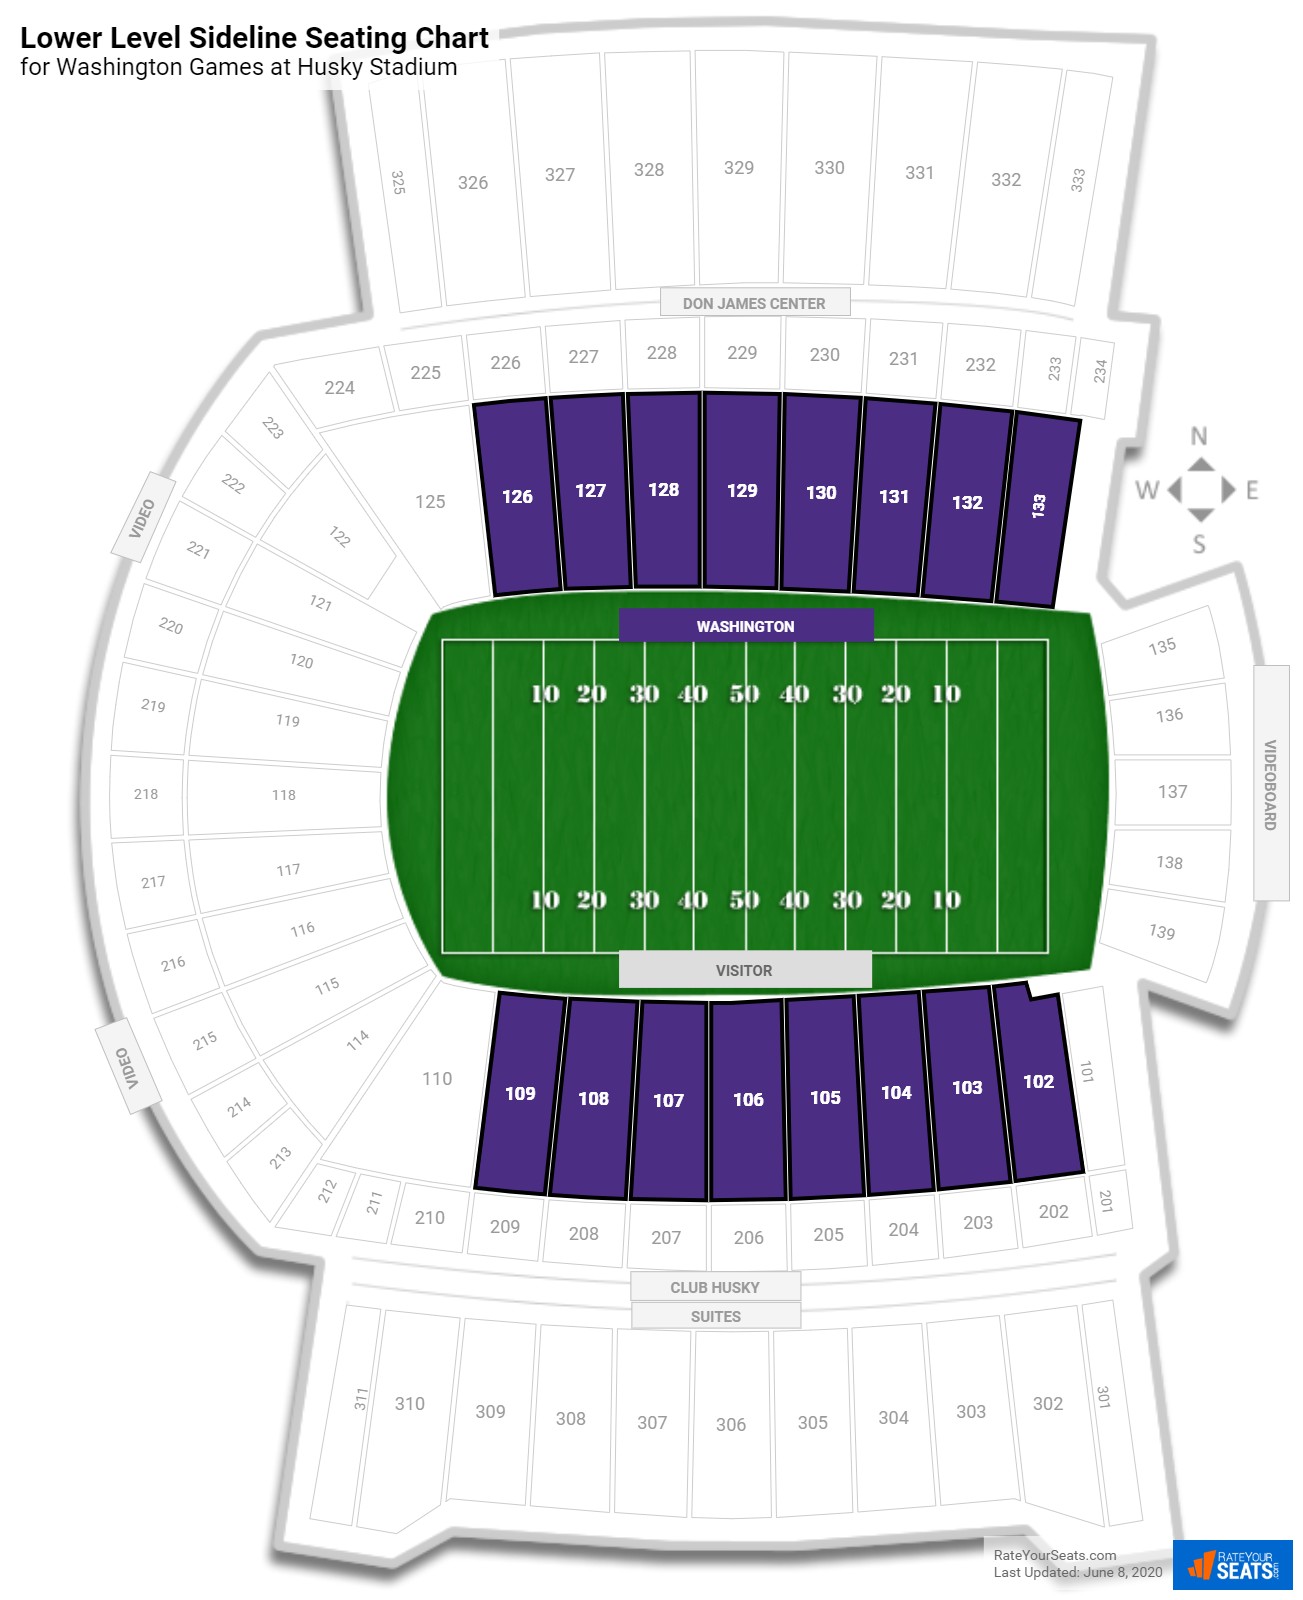 Lower Level Sideline - Husky Stadium Football Seating - RateYourSeats.com